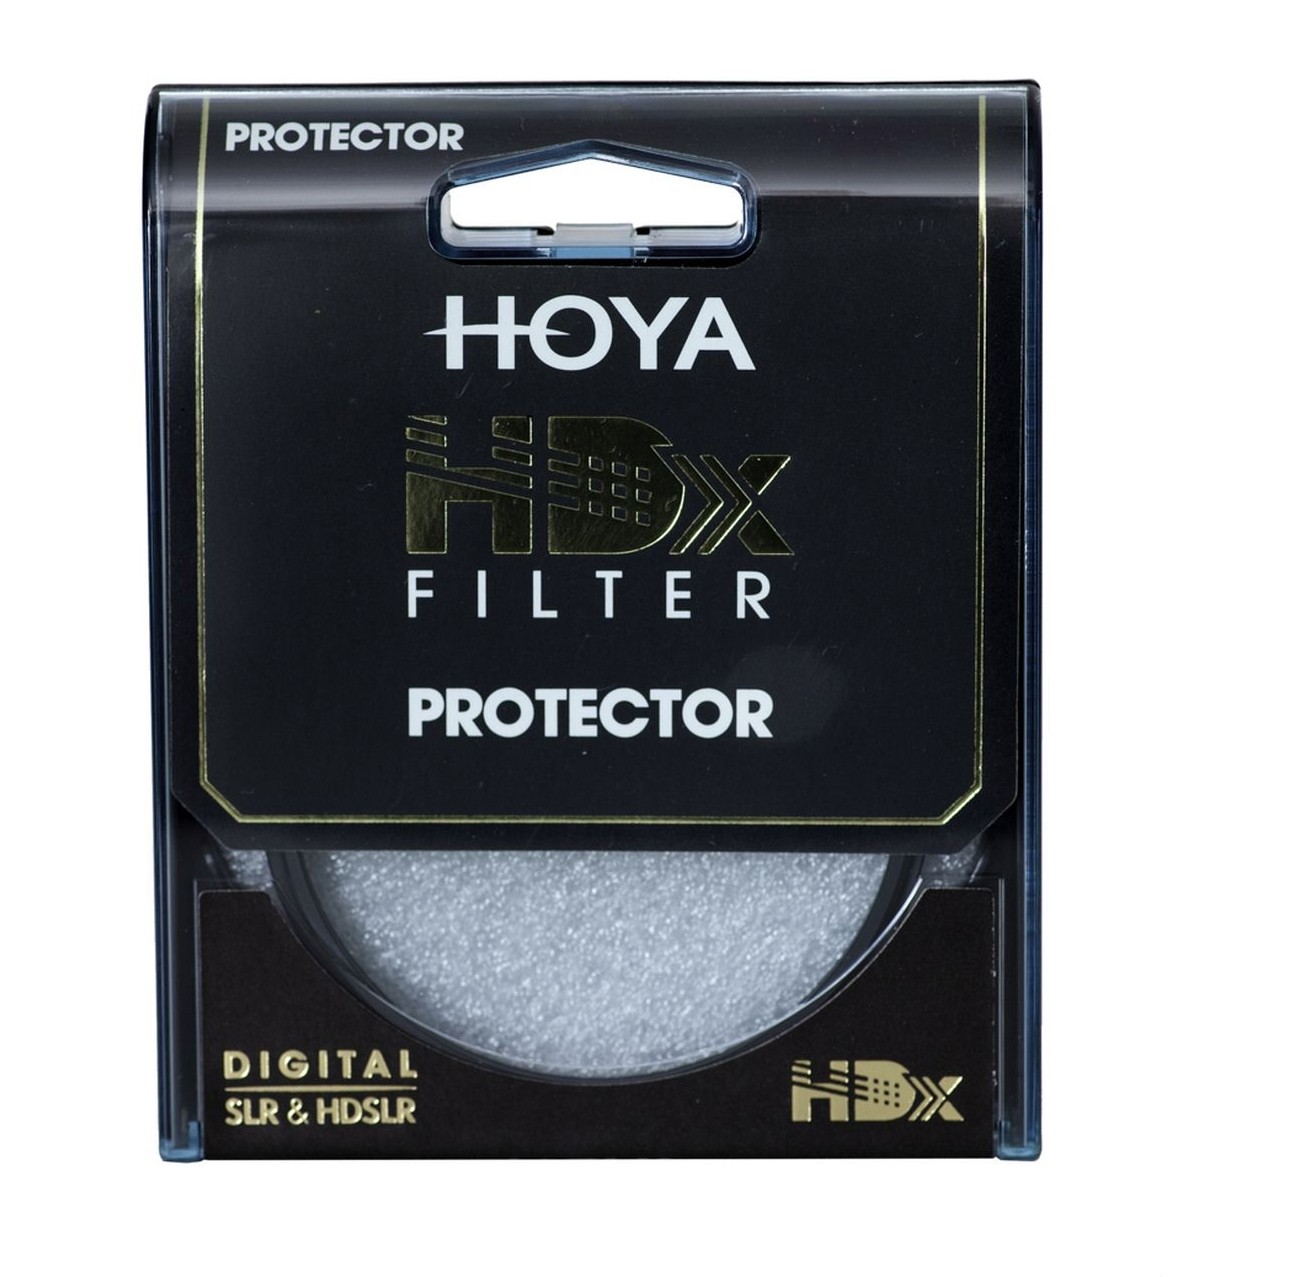 Hoya 40.5mm HDX Protector